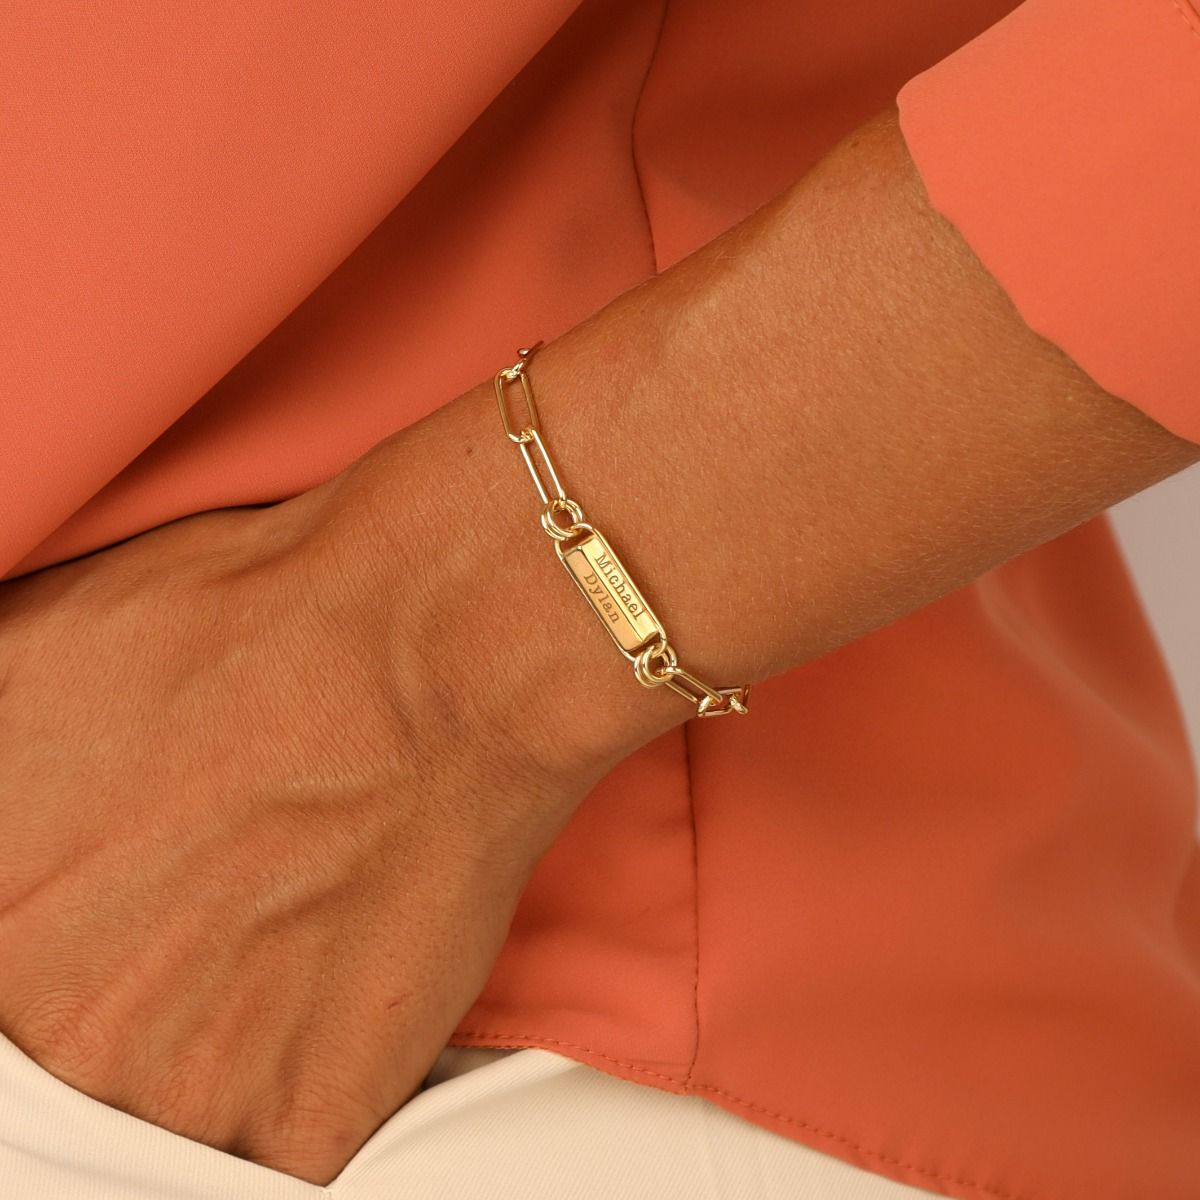 Name Bracelet with Diamond for Her - 18K Gold Vermeil - Talisa